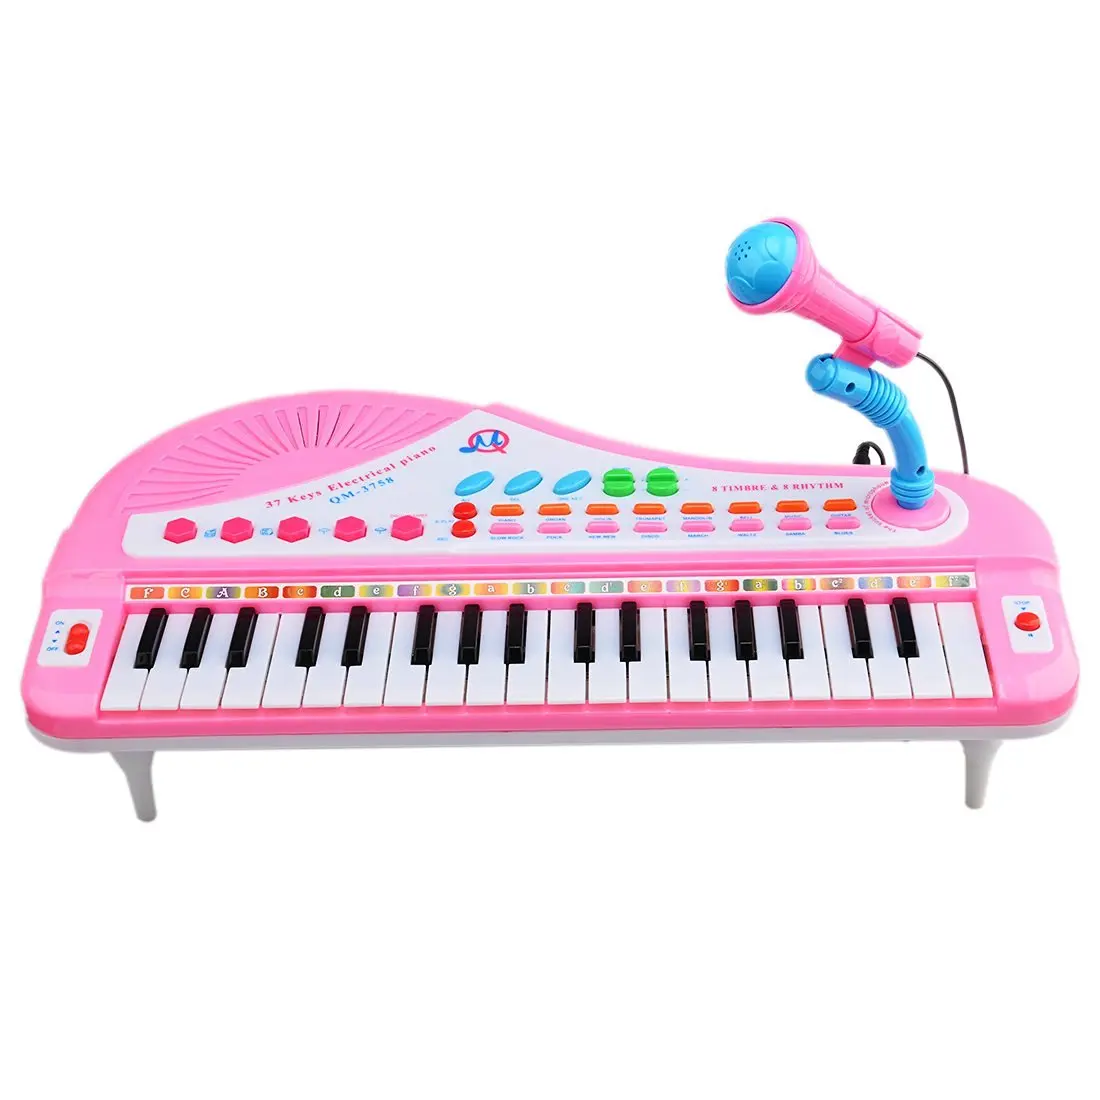 piano toy price